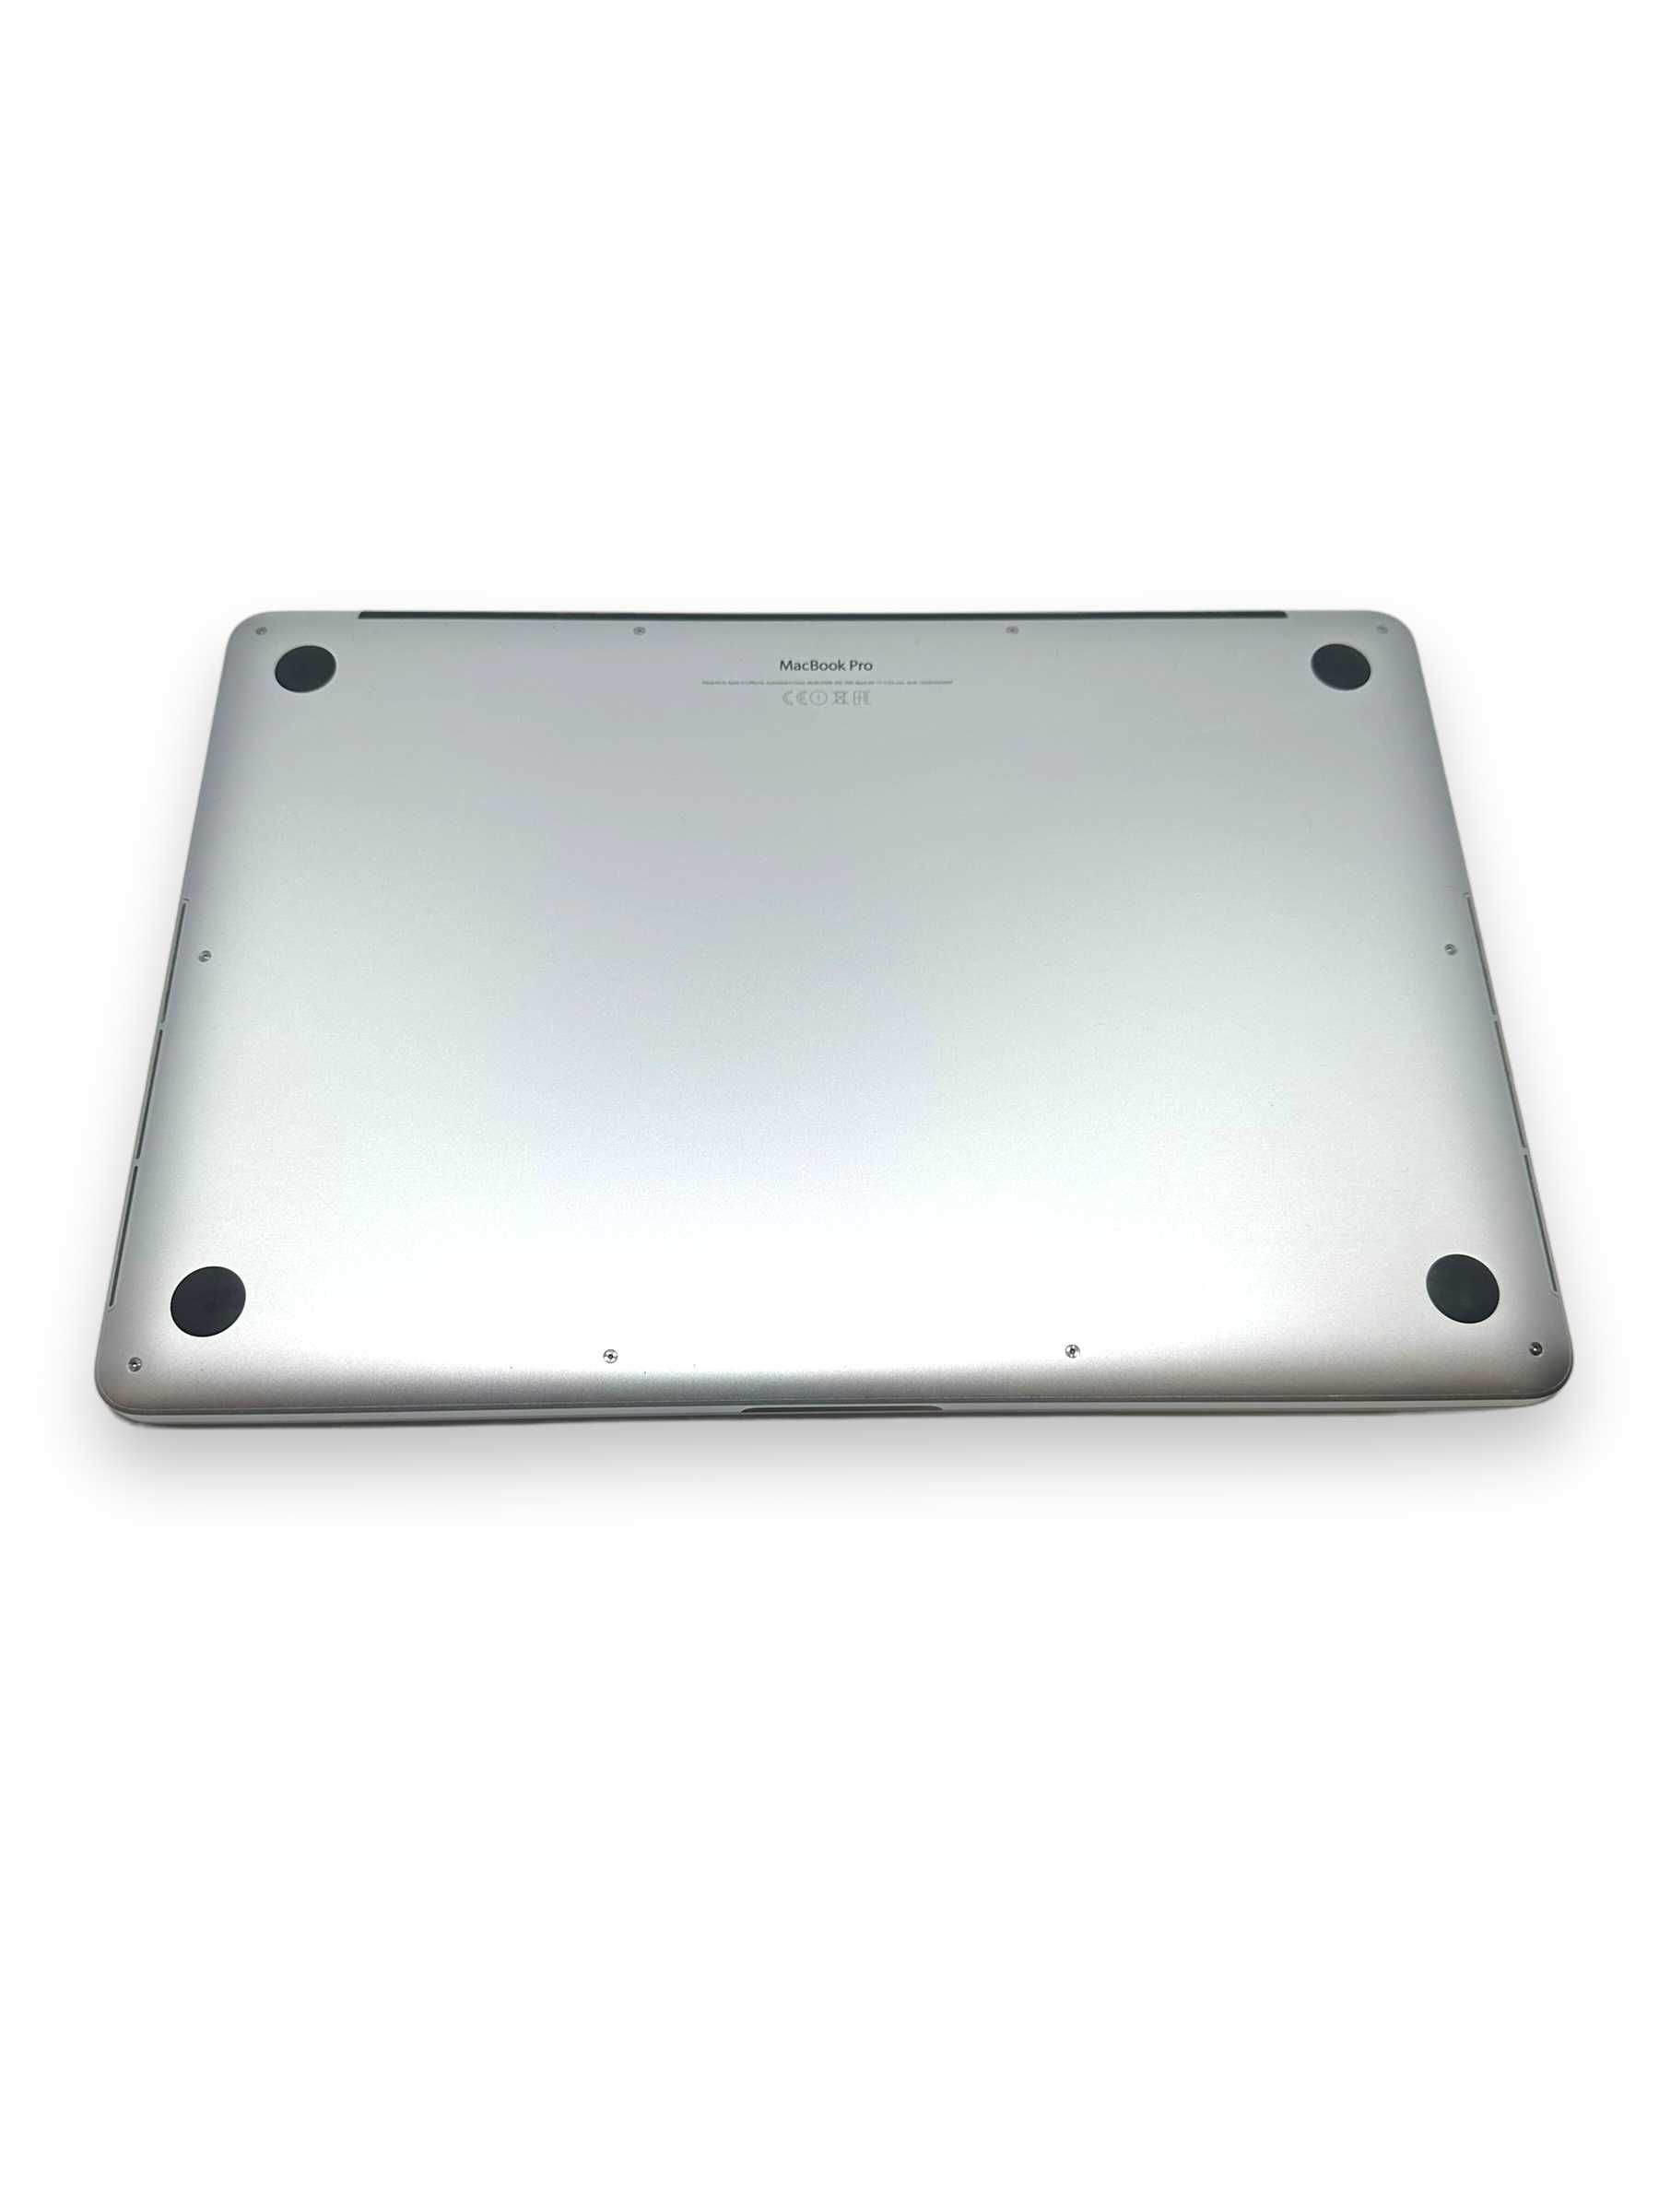 Laptop Macbook Pro 15 2015 A1398 16/512 GB i7 Intel, R9